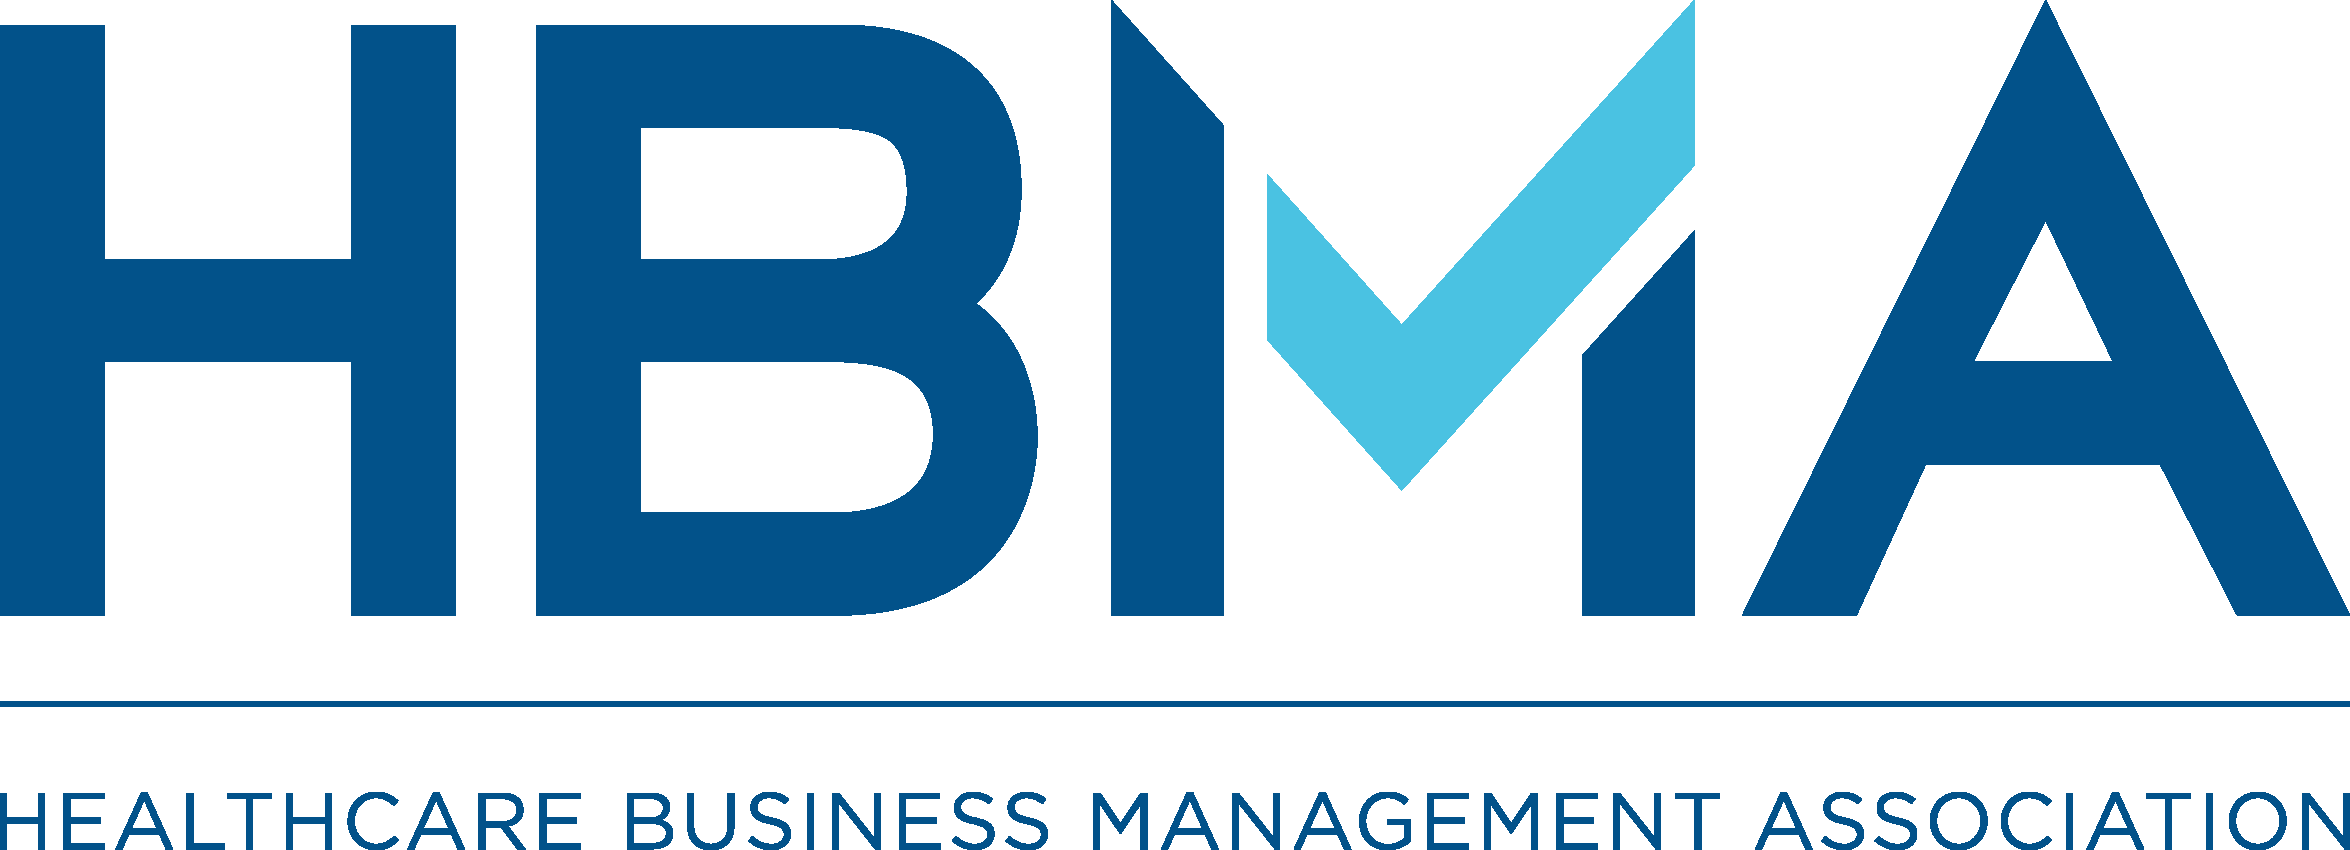 Healthcare Business Management Association Logo